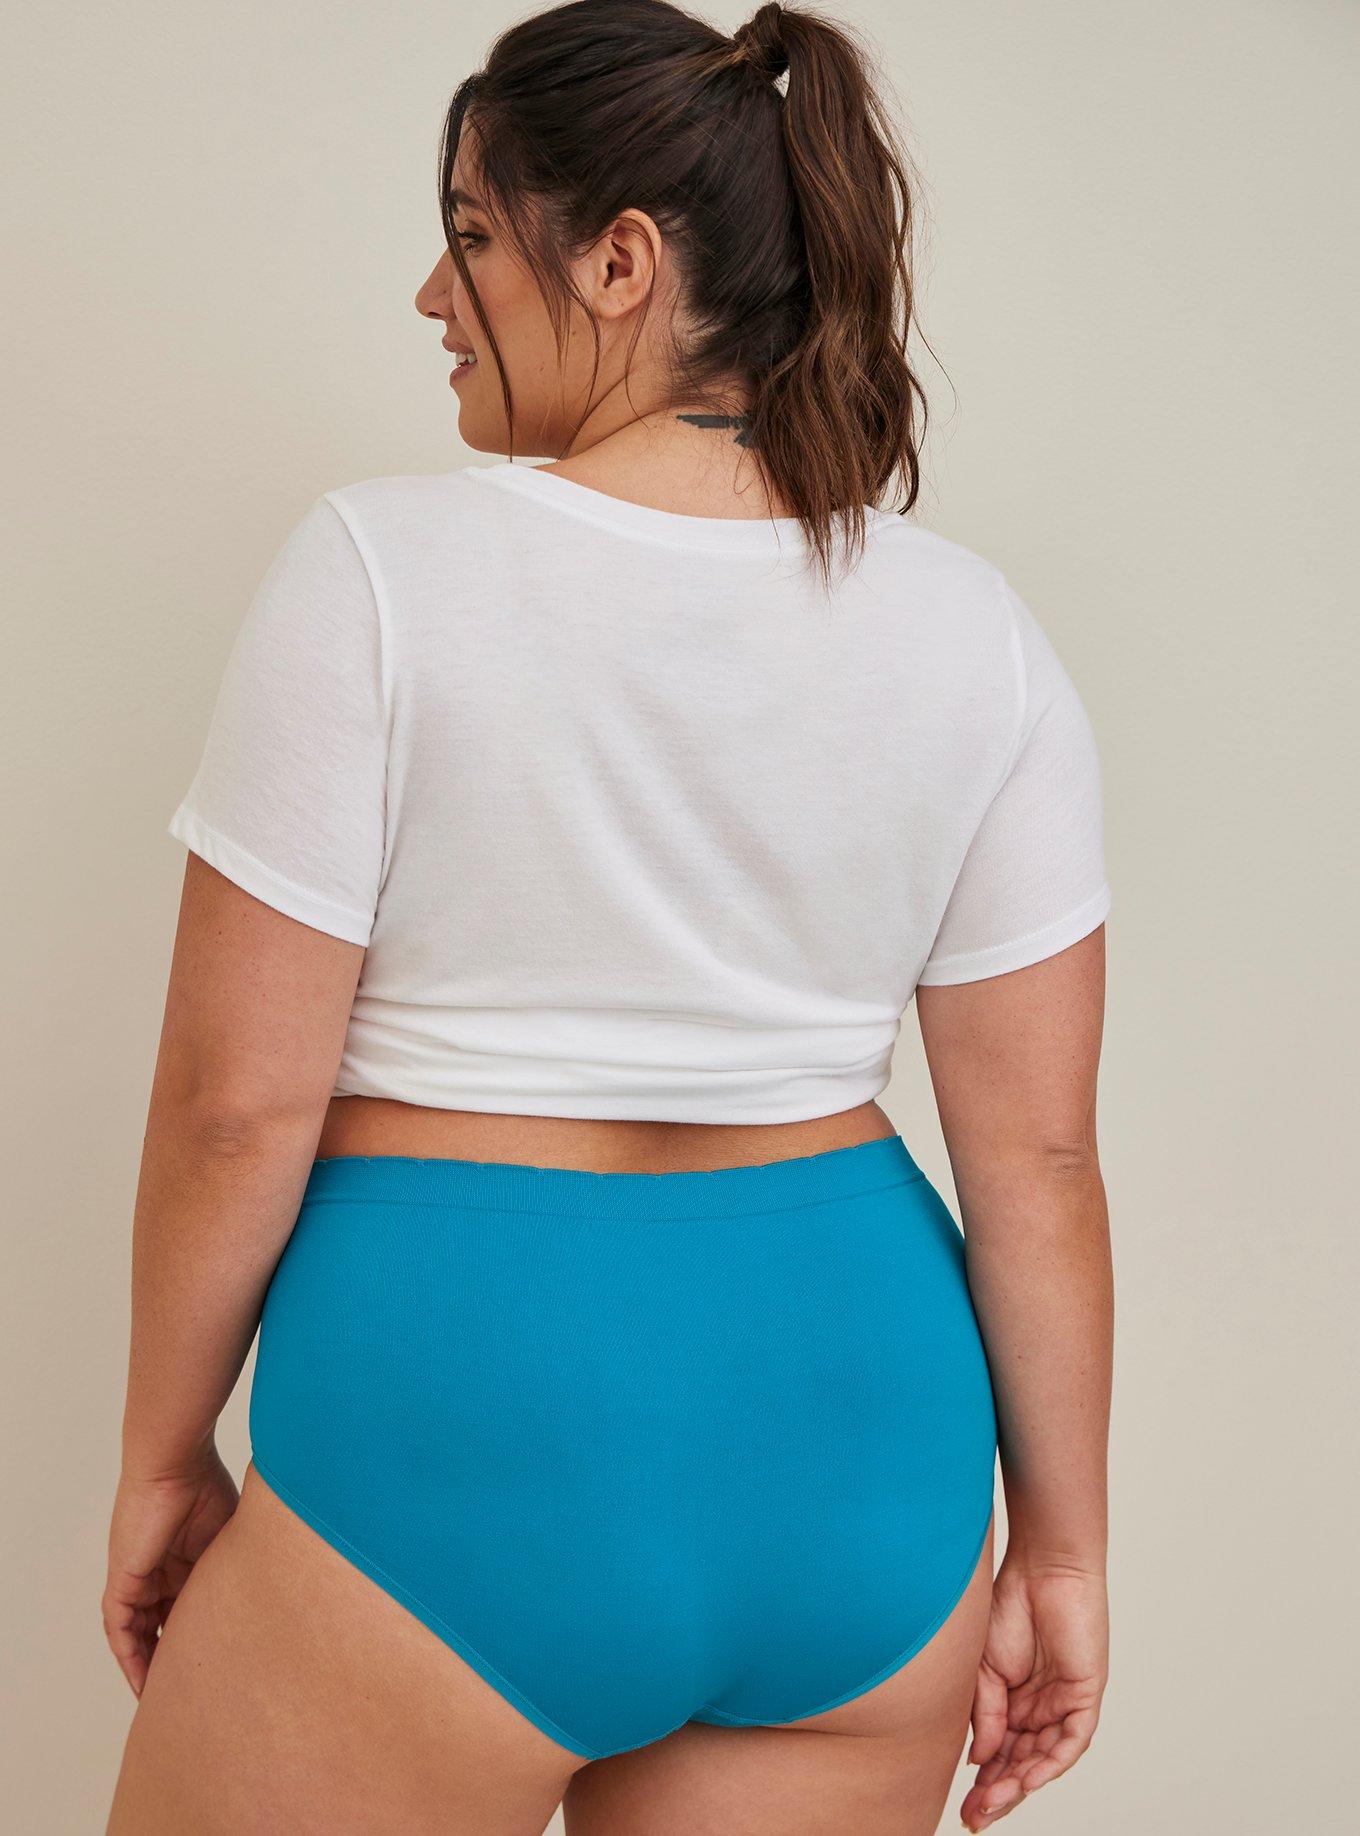 Plus Size - SPANX® - Everyday Shaping Panties Brief - Torrid